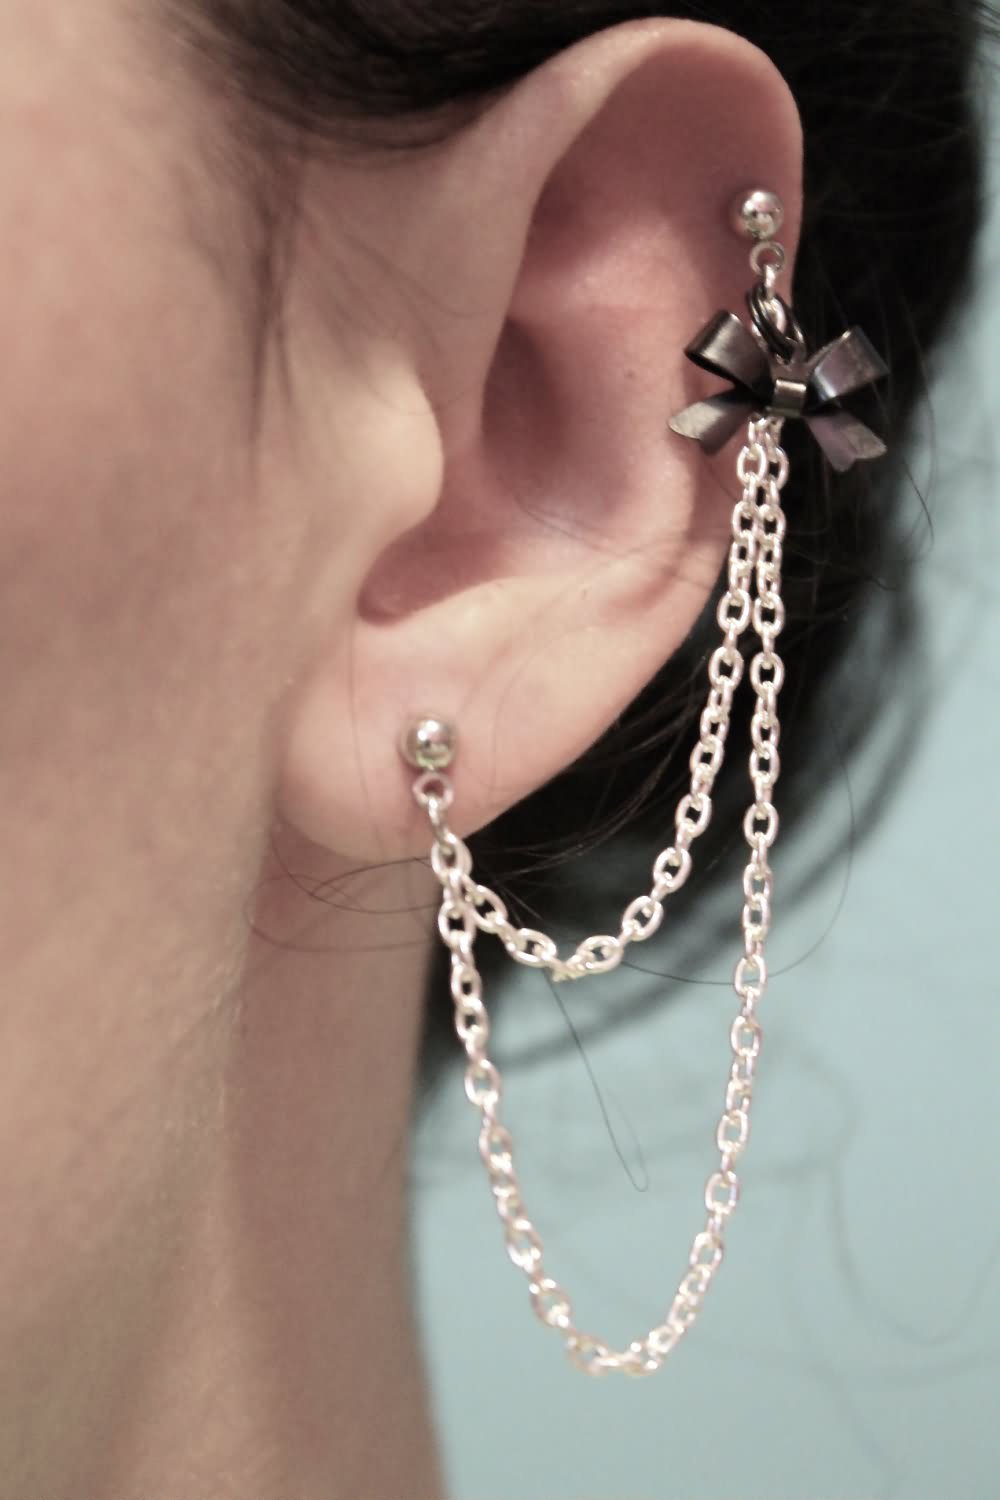 Bow Chain Piercing On Left Ear